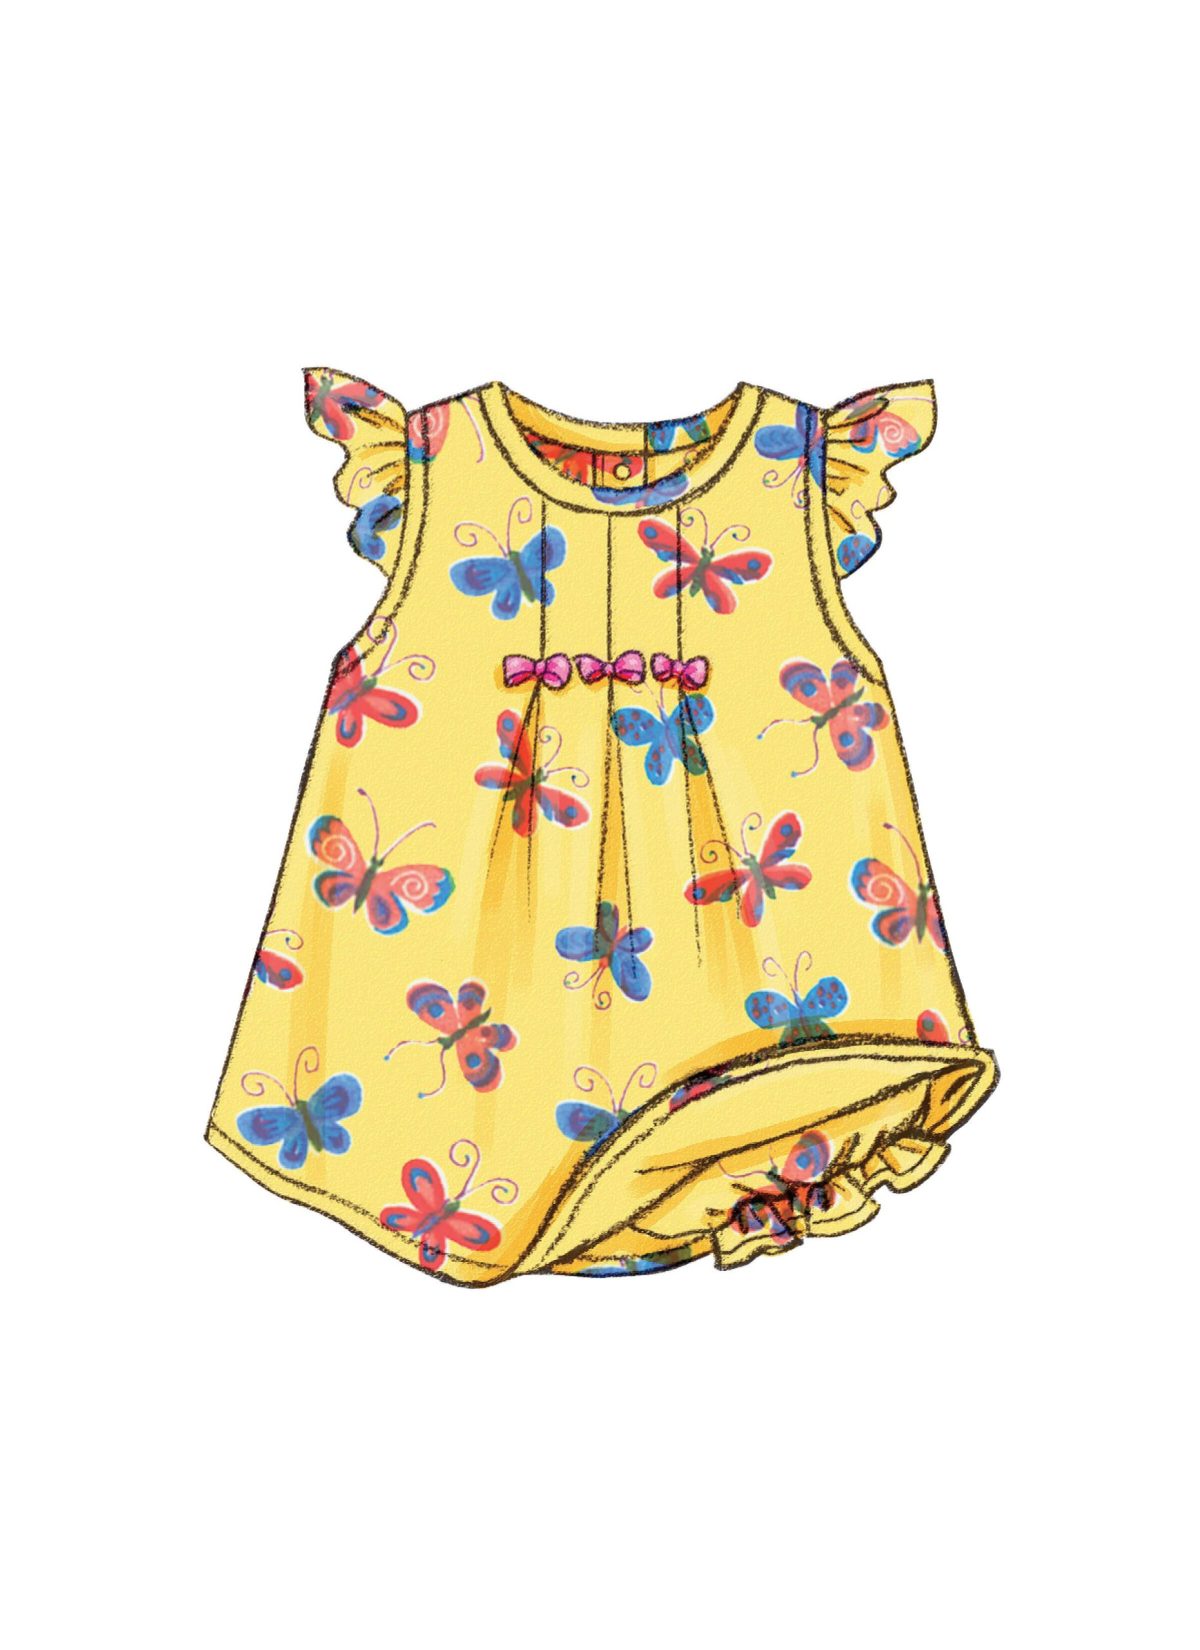 Butterick Sewing Pattern B3405 Infants' Dress, Top, Romper, Panties, Hat & Headband